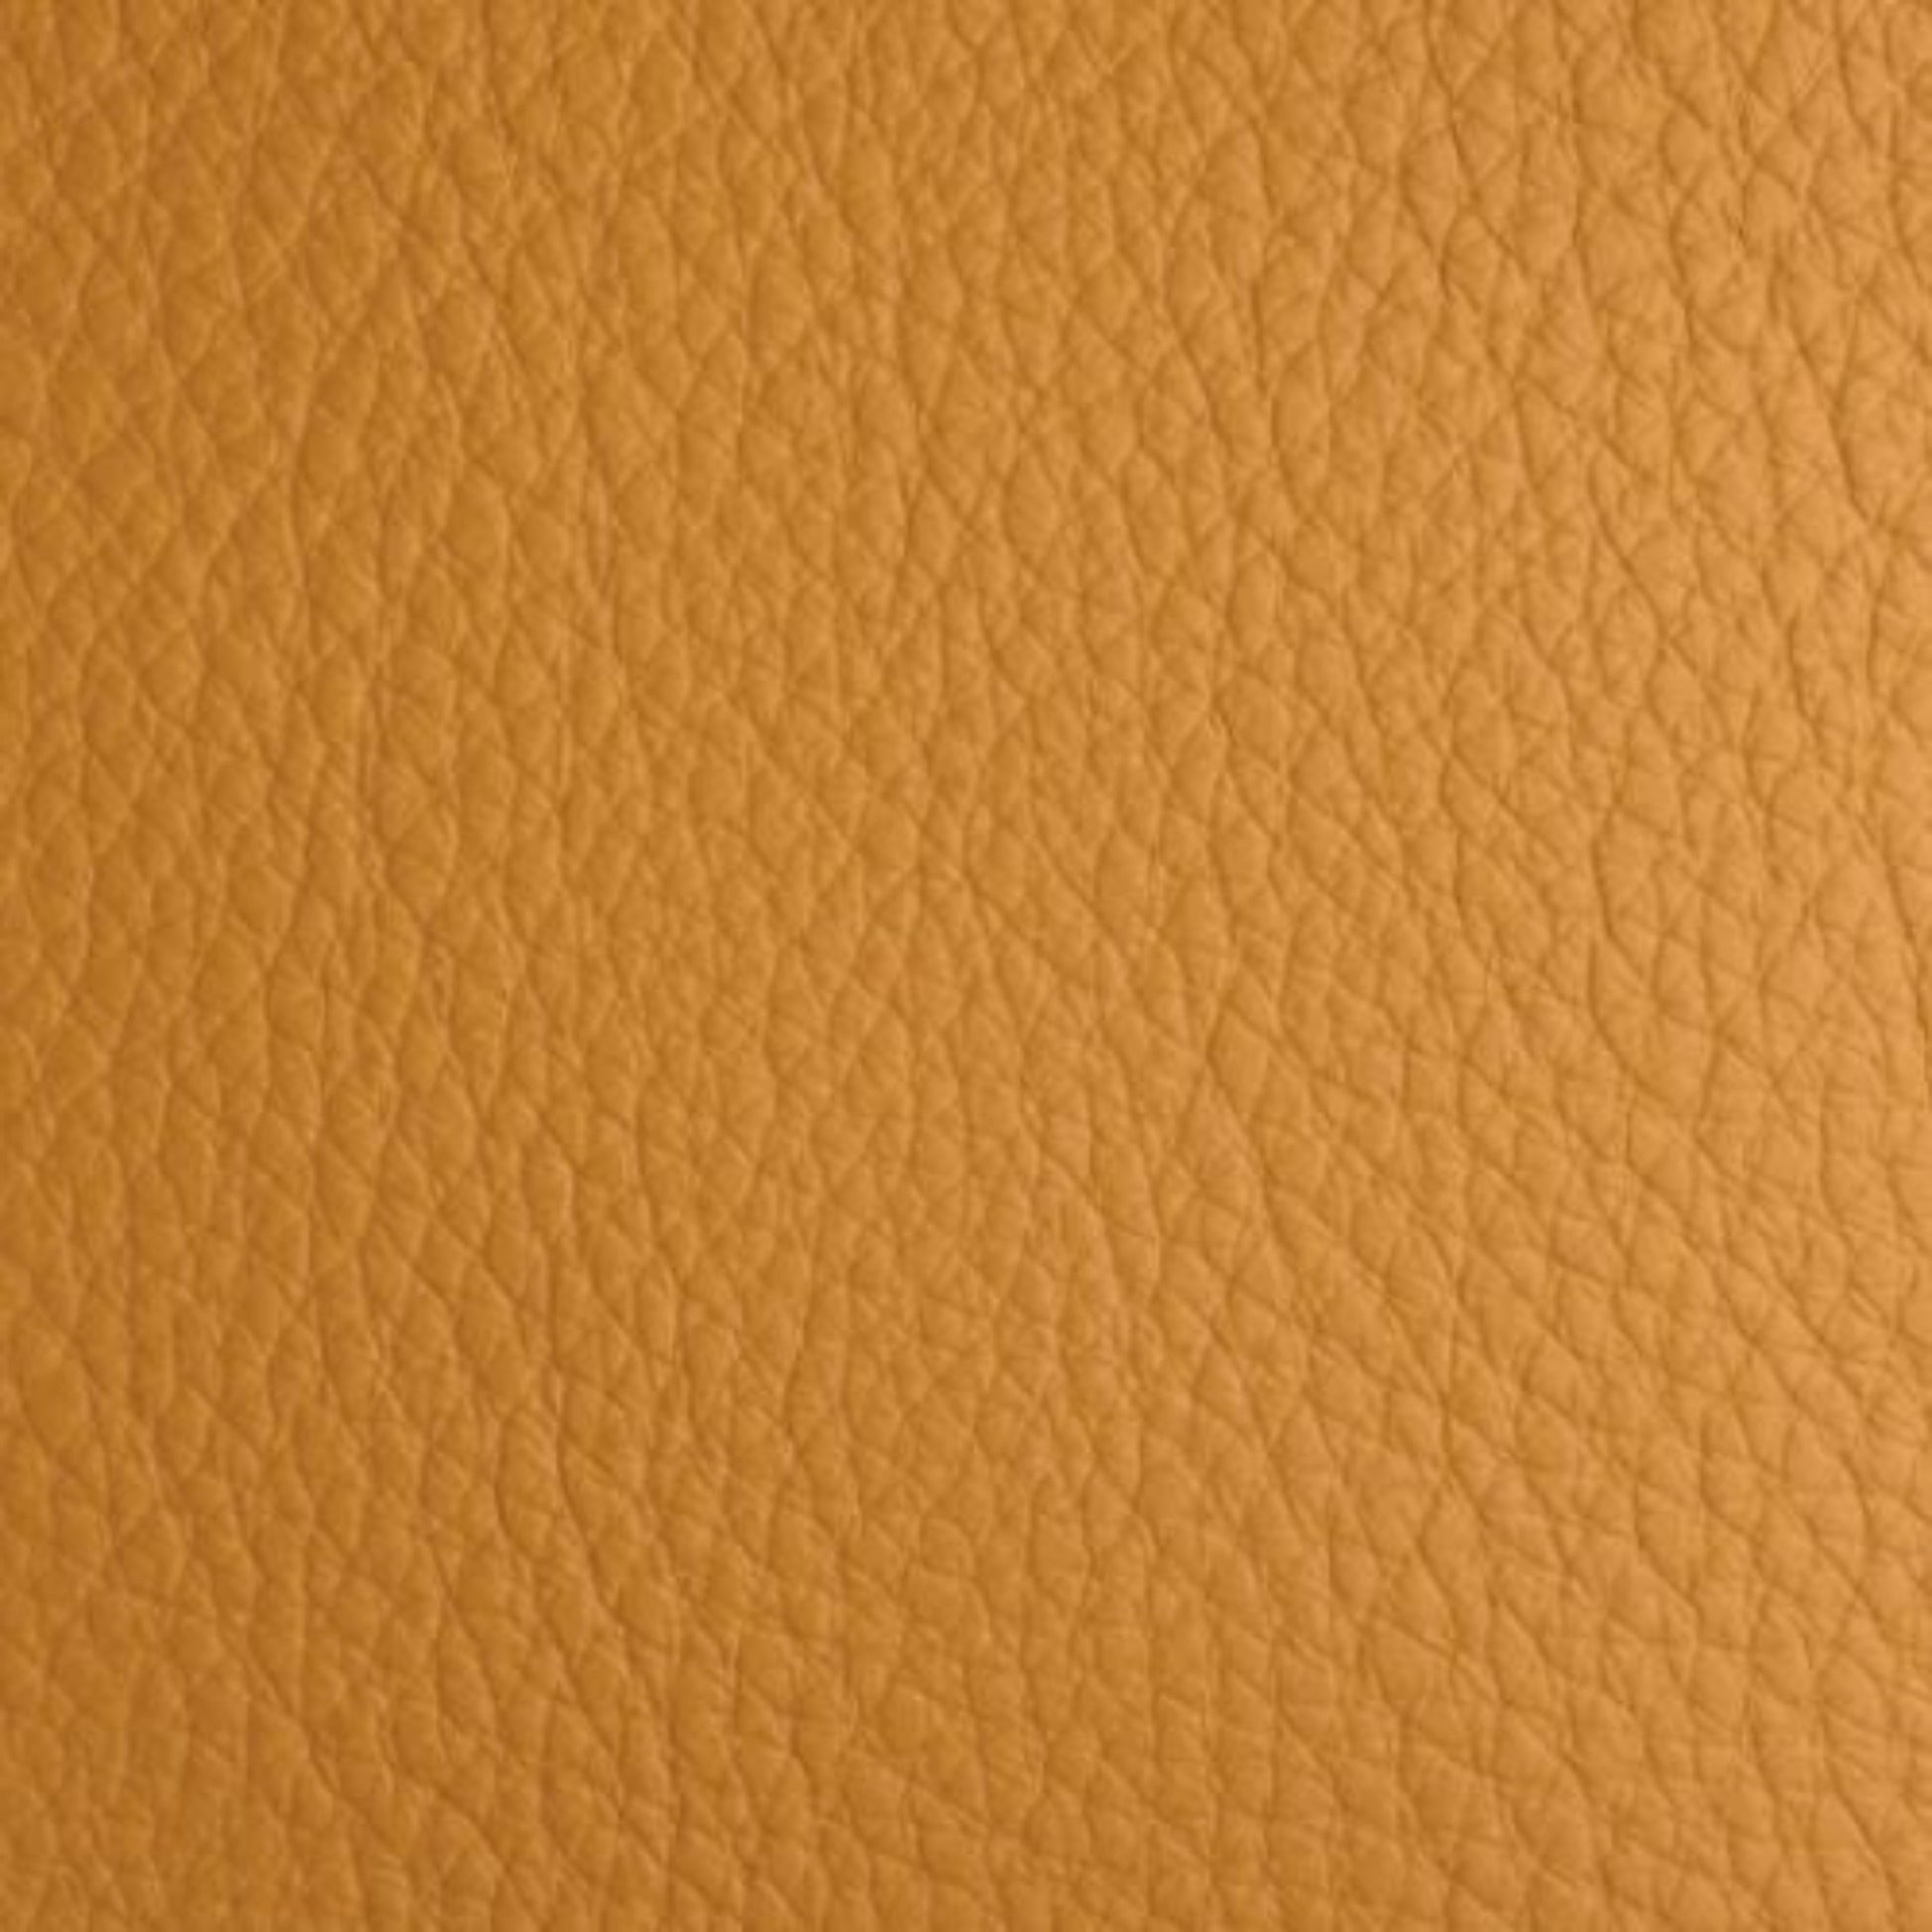 Comfy brown top grain half leather sofa